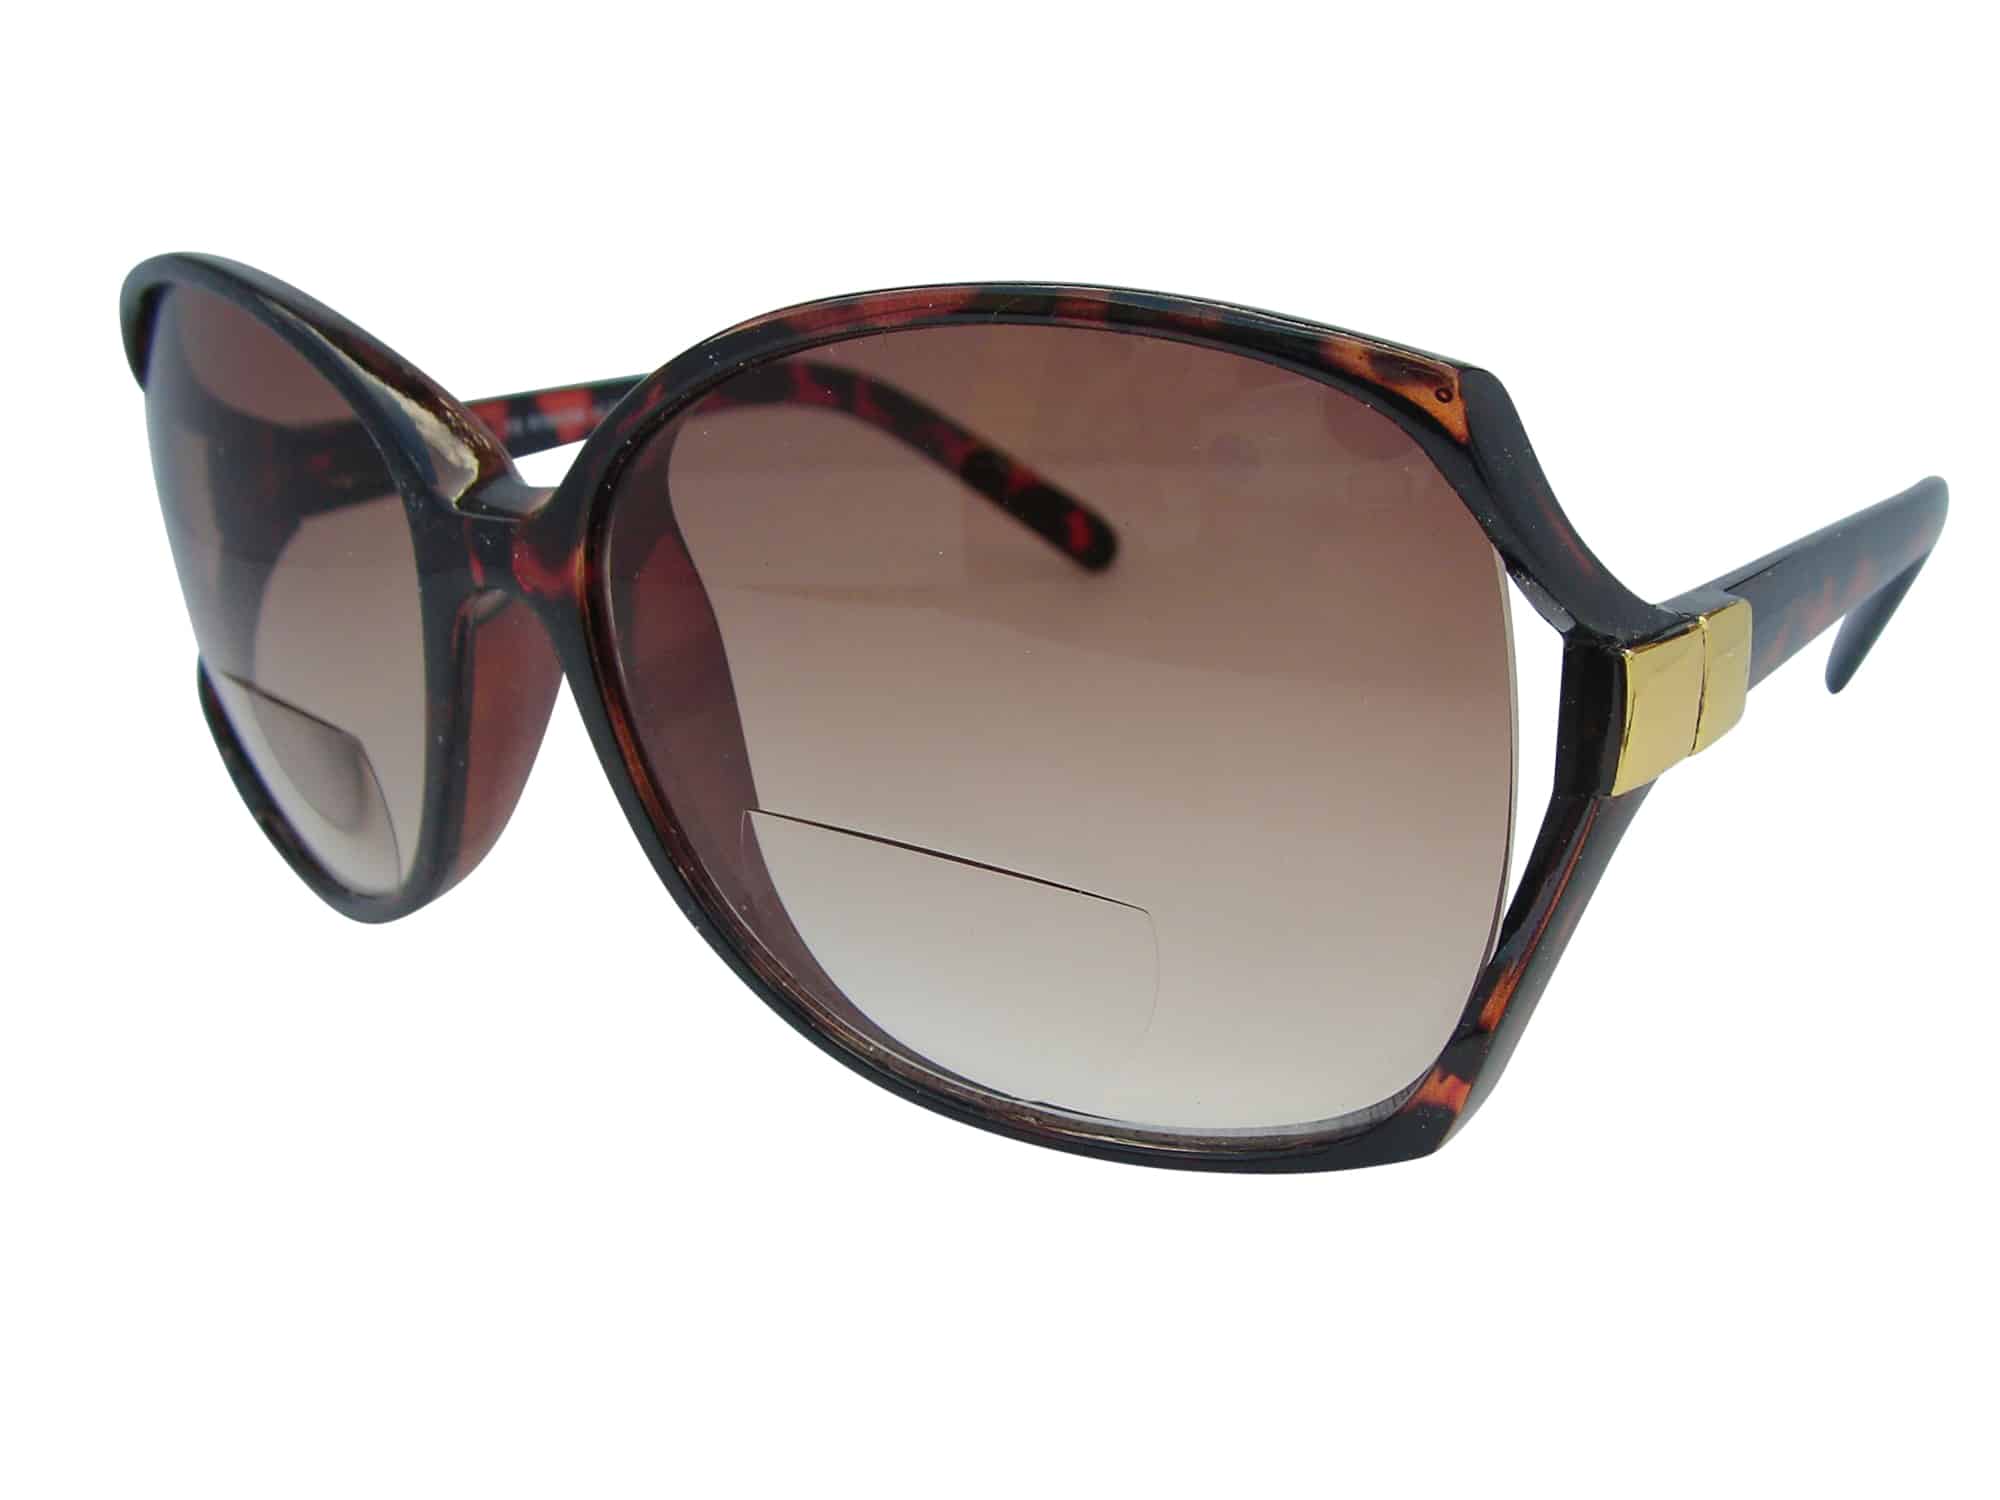 Cheri Butterfly Bifocal Sunglasses in Tortoiseshell